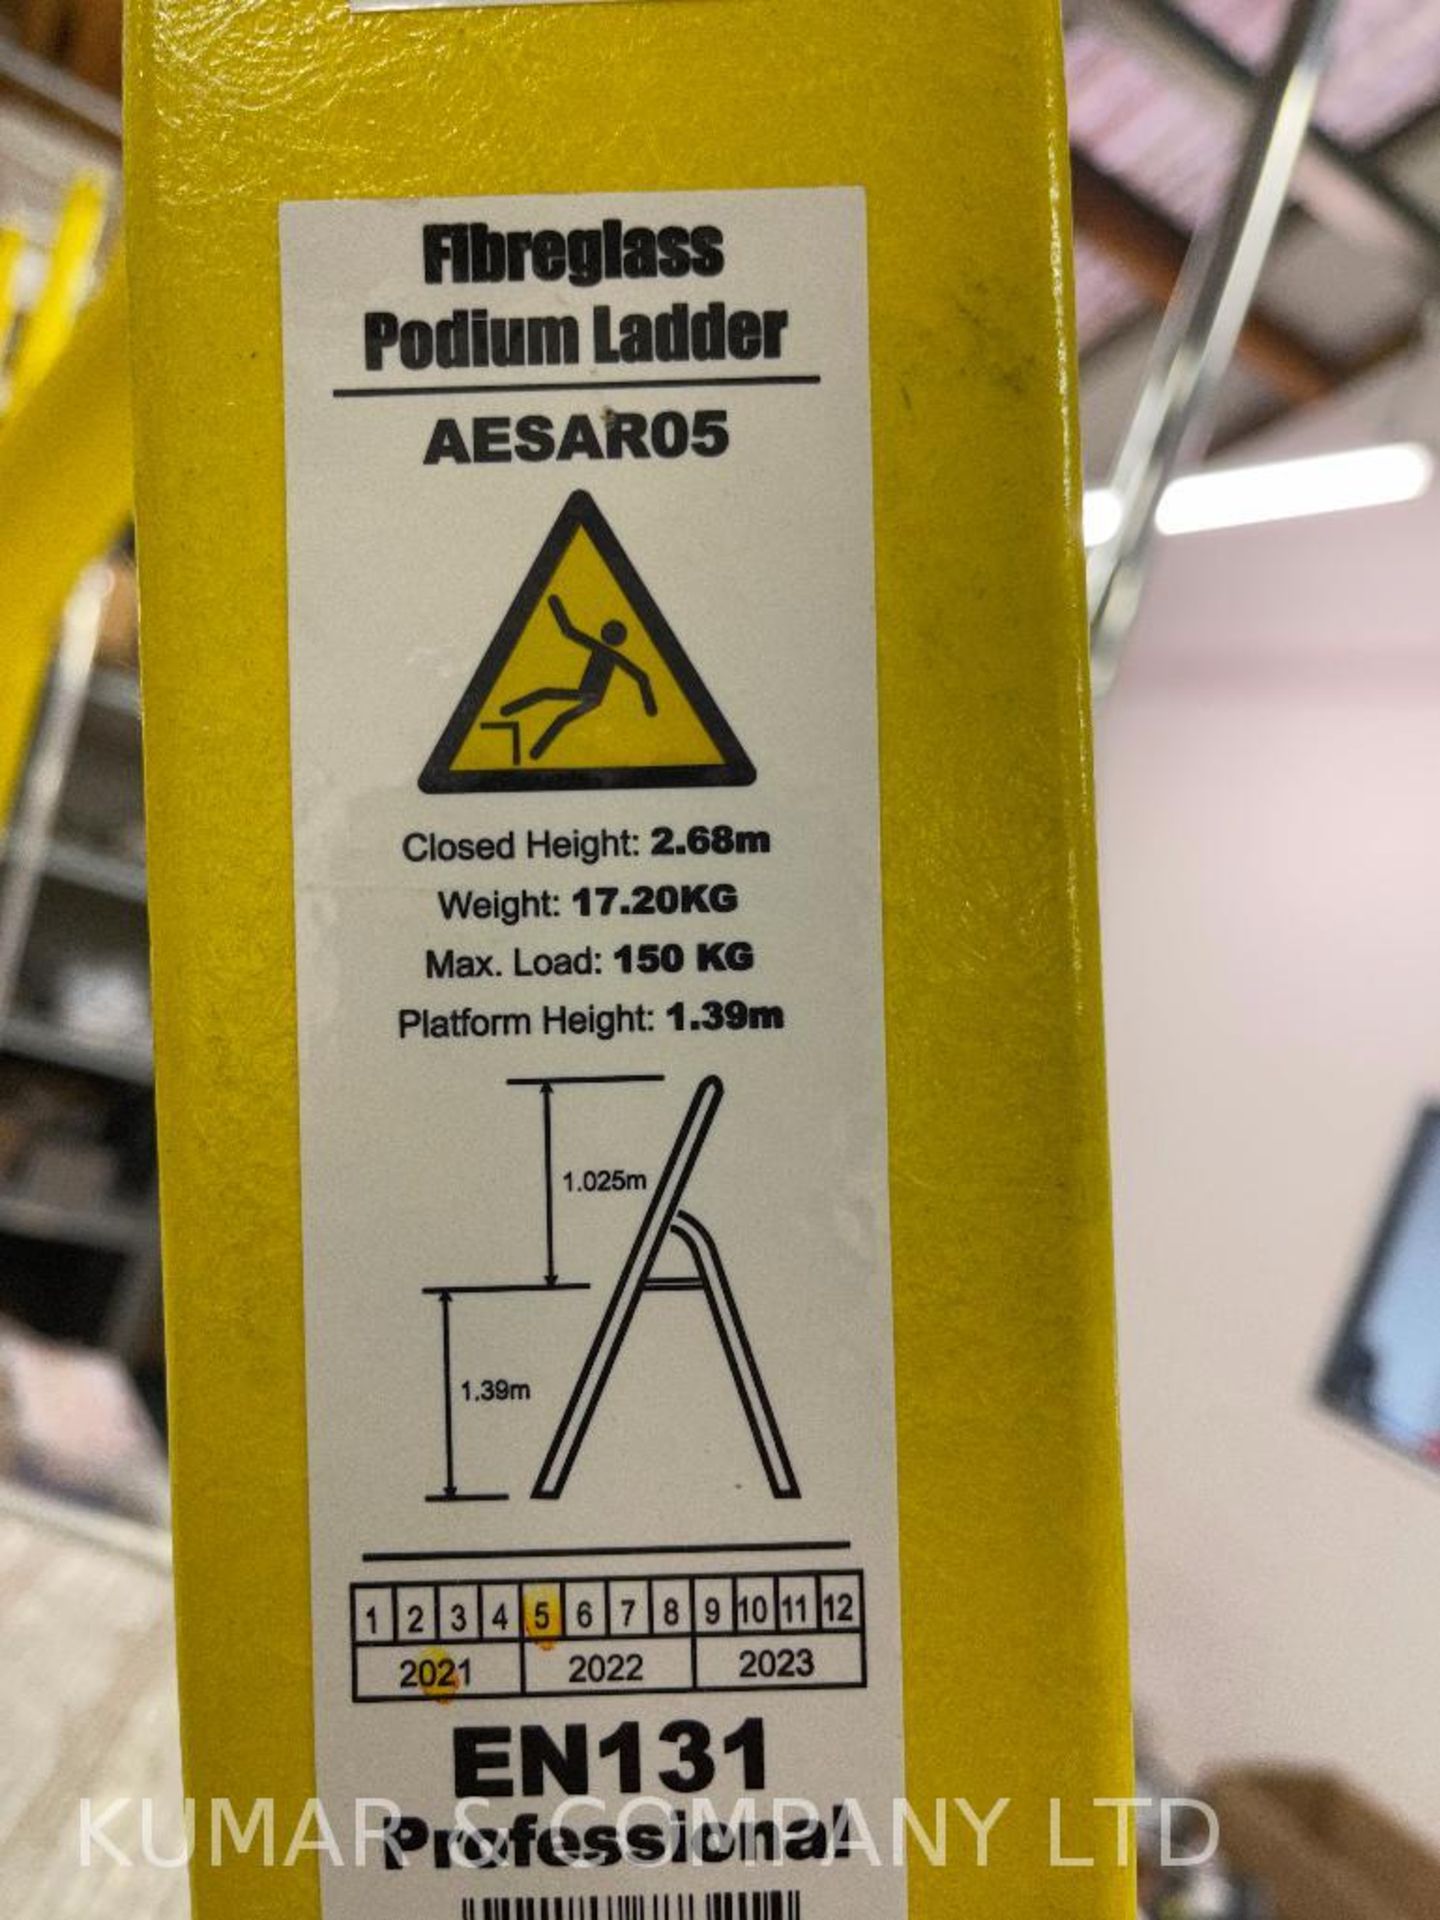 Clow AESAR05 5 Step Fibreglass Wide Step Podium Ladder, EN131 Professional Certified - Image 8 of 9